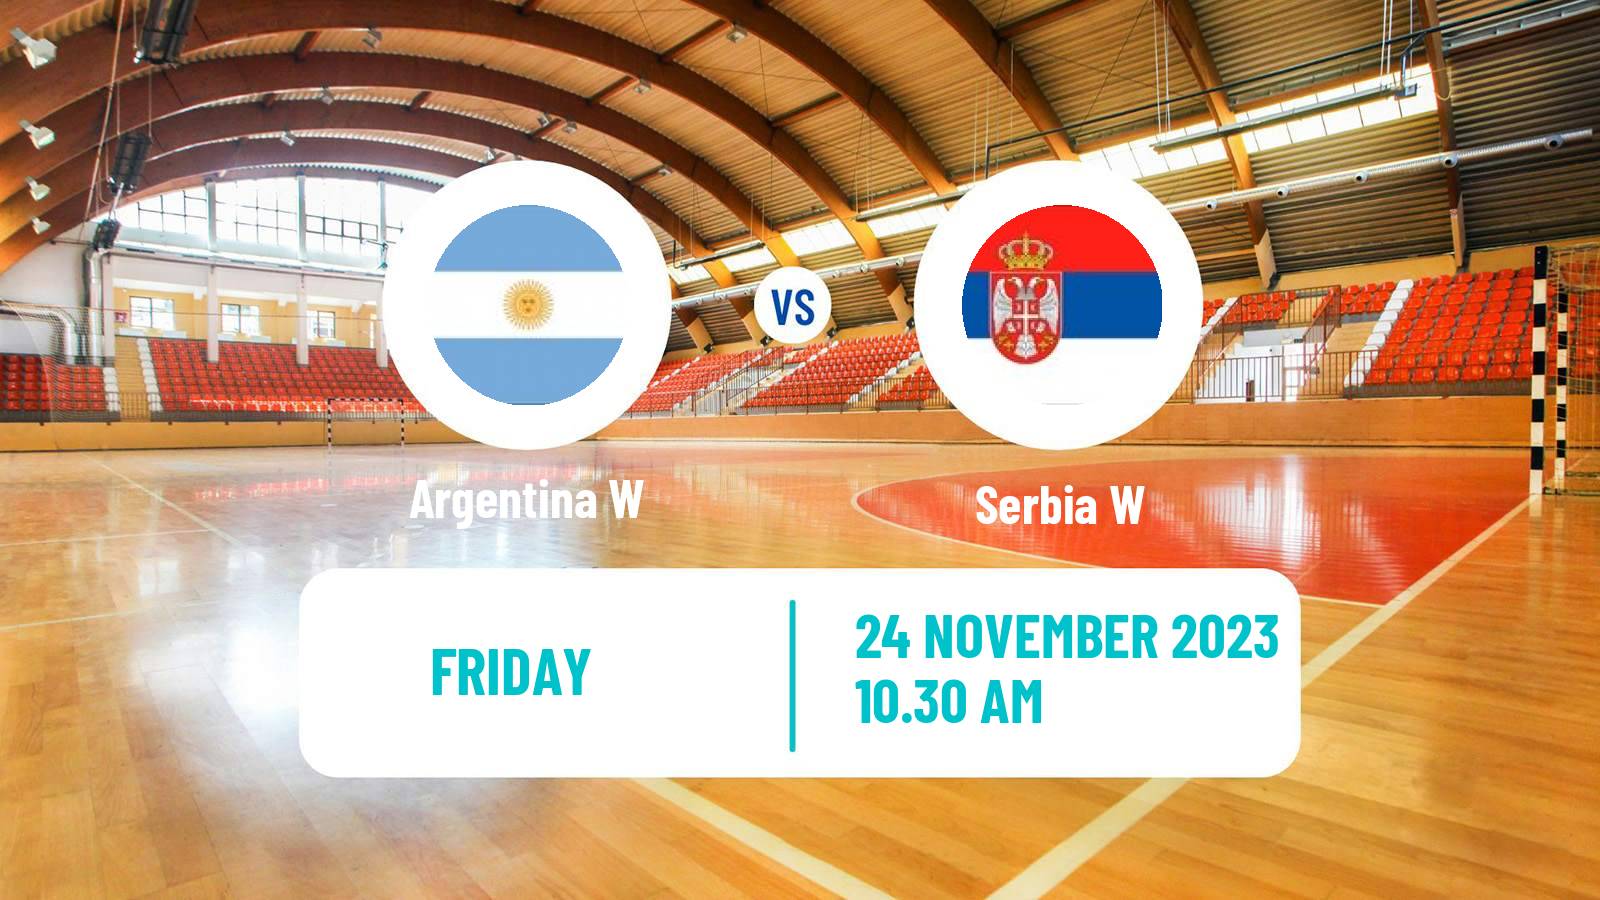 Handball Friendly International Handball Women Argentina W - Serbia W